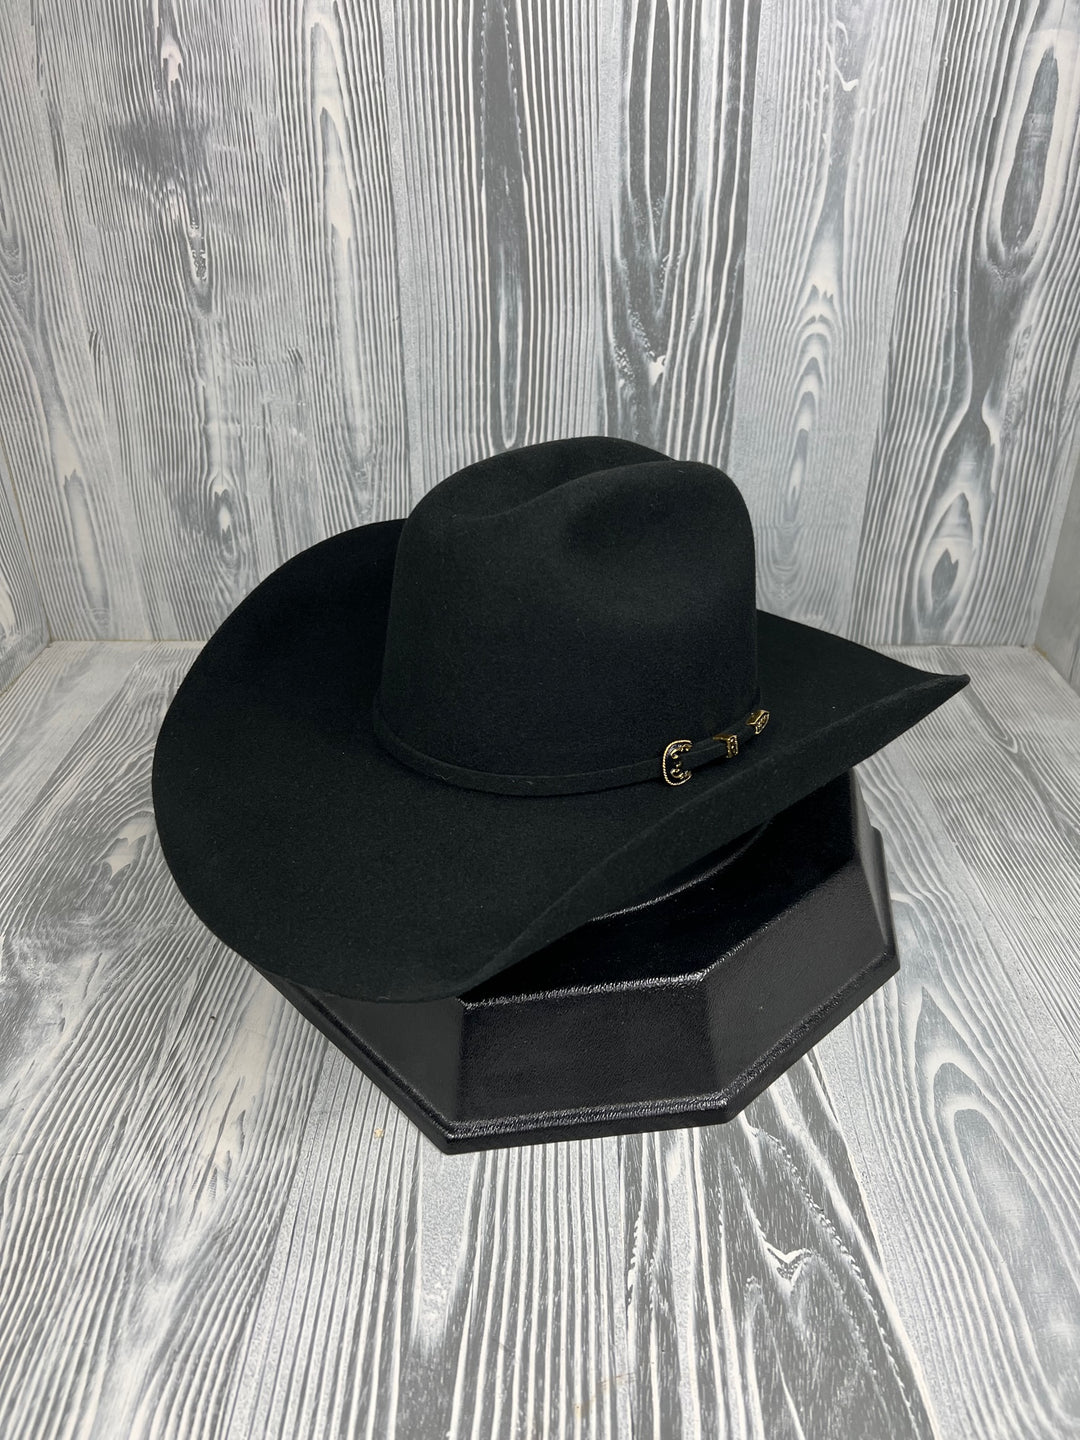 Serratelli Black Pure Wool Cowboy Hat 4 1/4" Brim